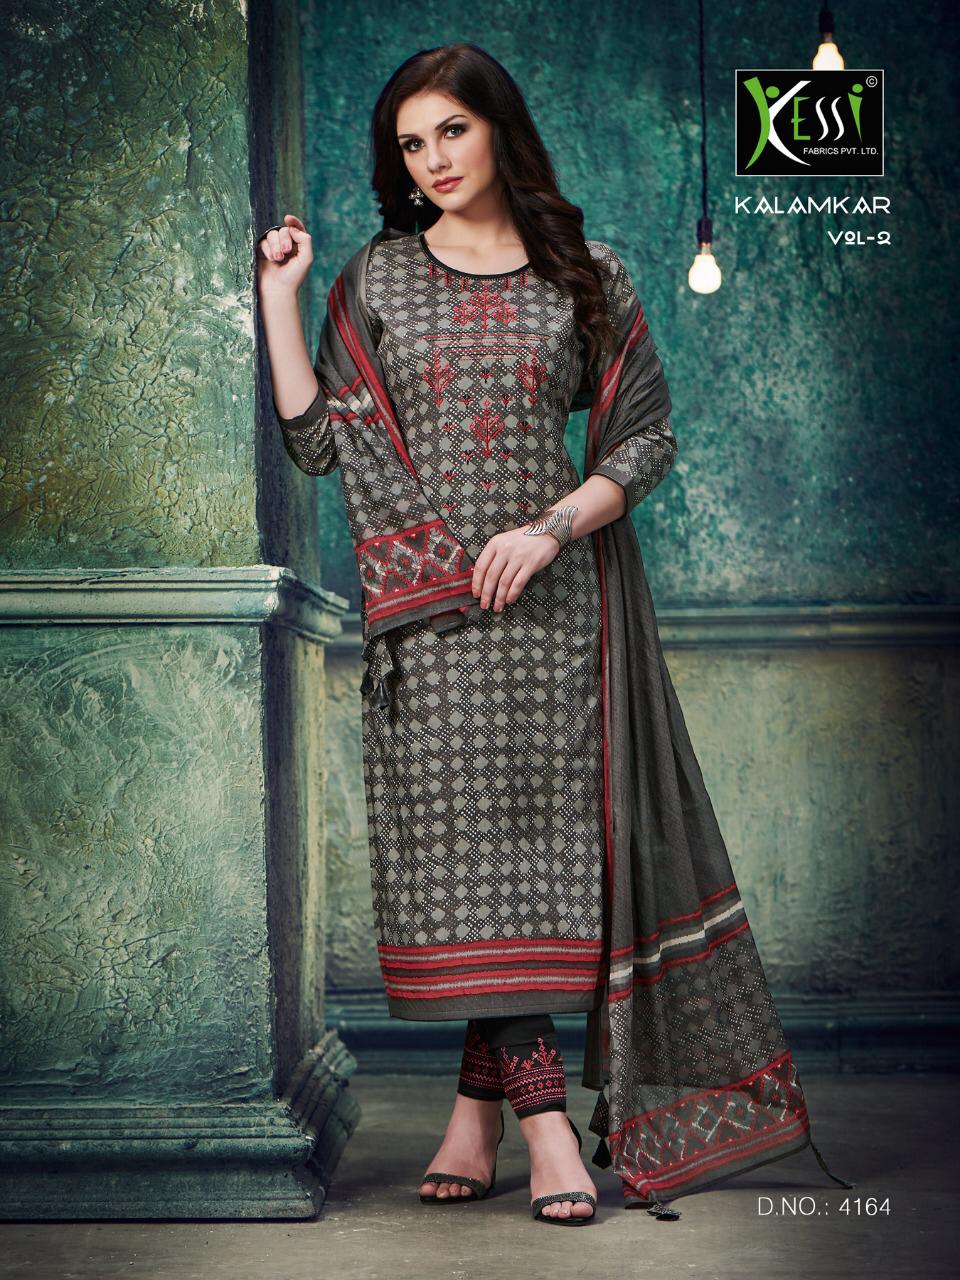 kessi kalamkar vol 2 colorful fancy collection of salwaar suits at reasonable rate